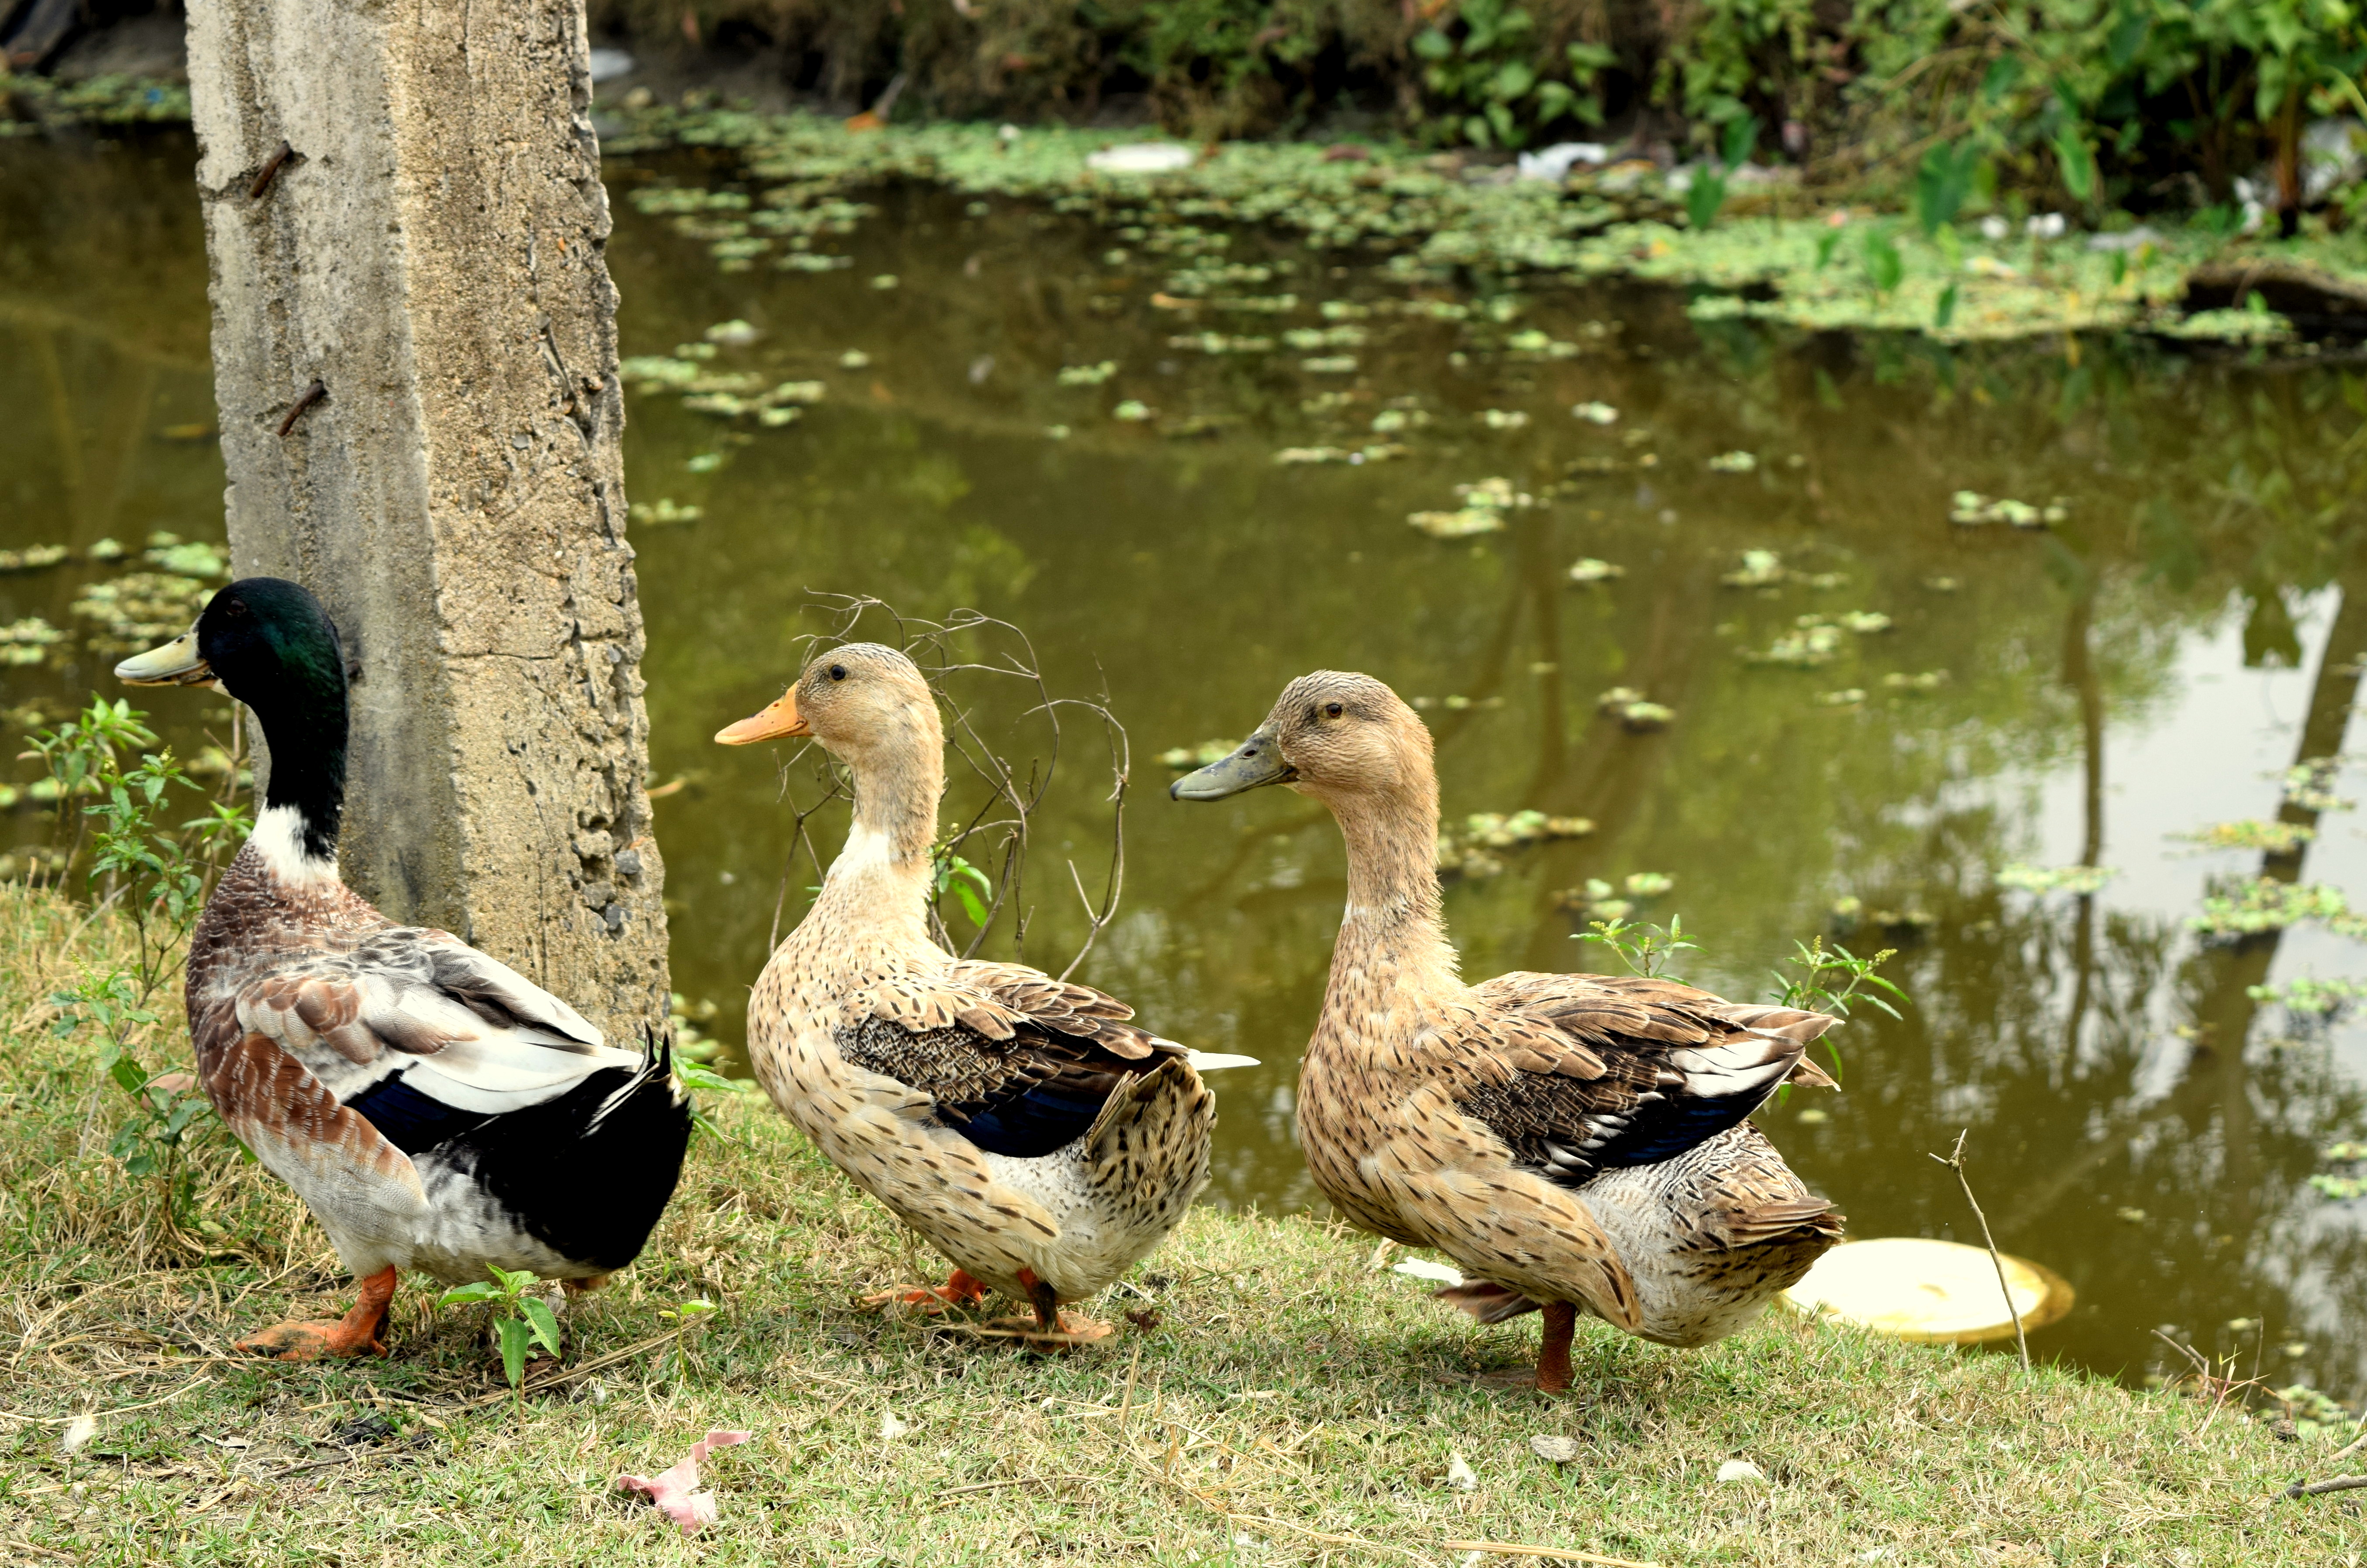 File:Three Ducks.jpg - Wikimedia Commons